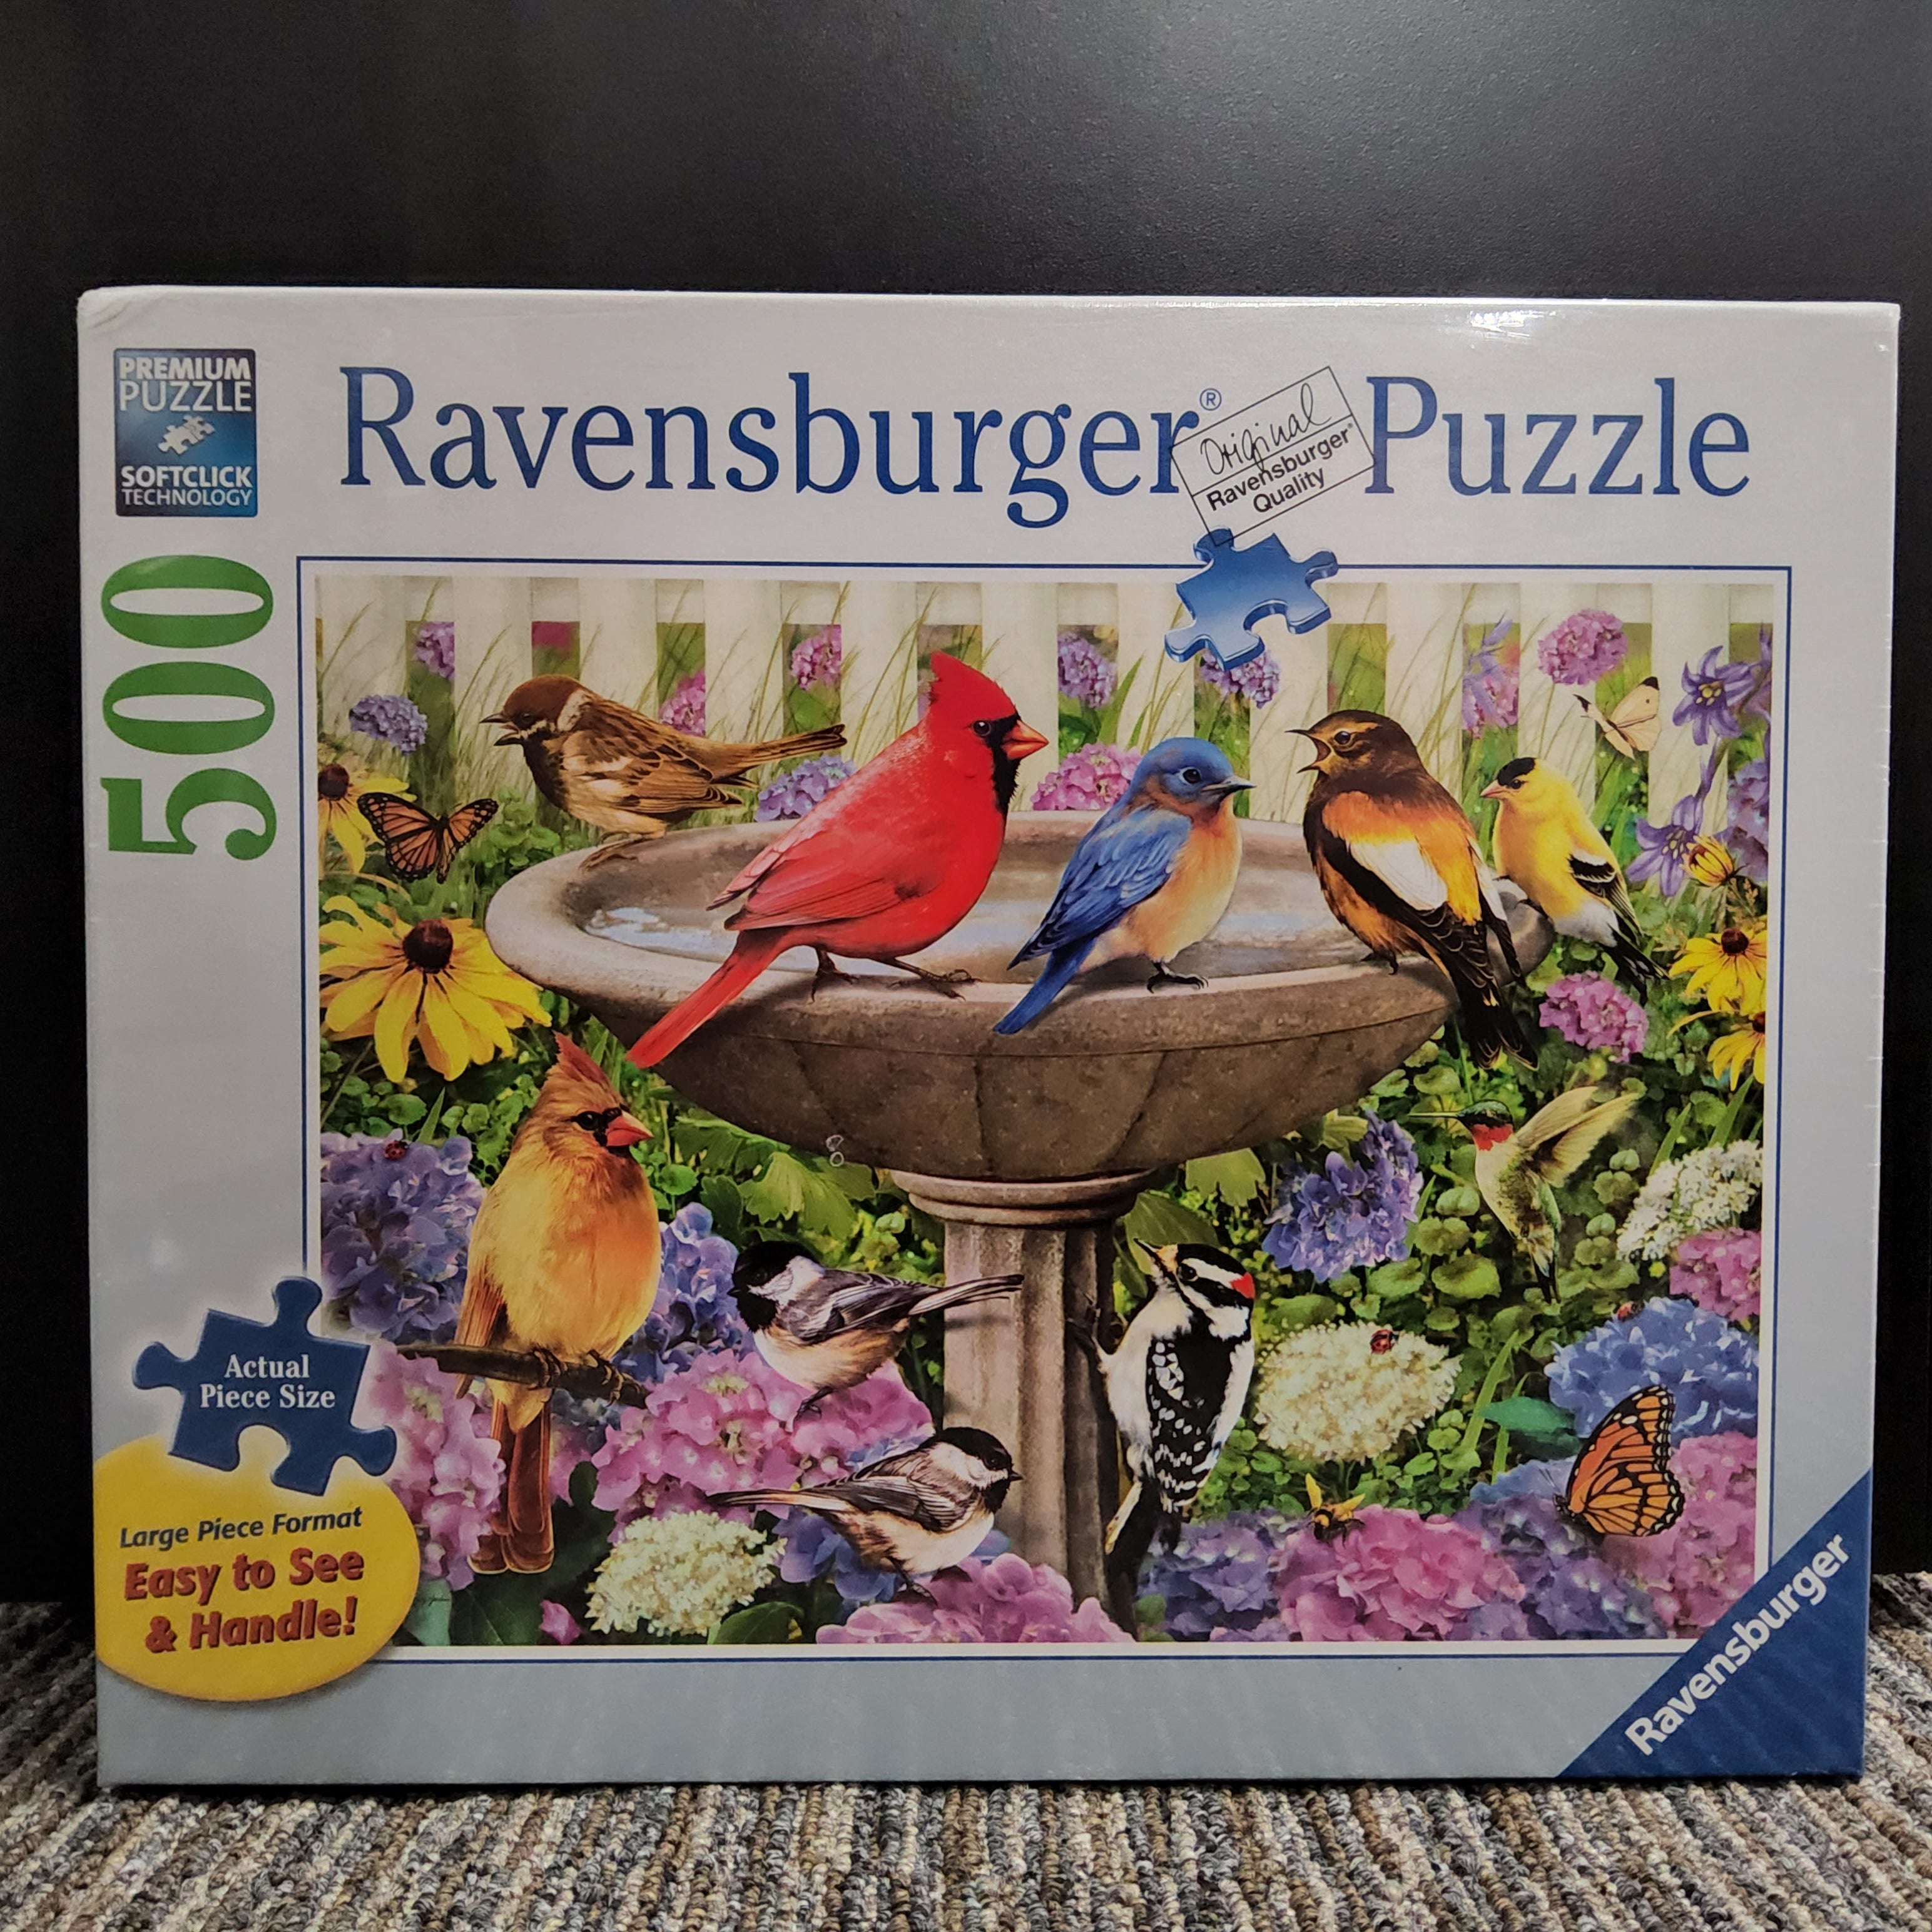 Ravensburger Puzzle - At the Birdbath - 500 pieces - #16793